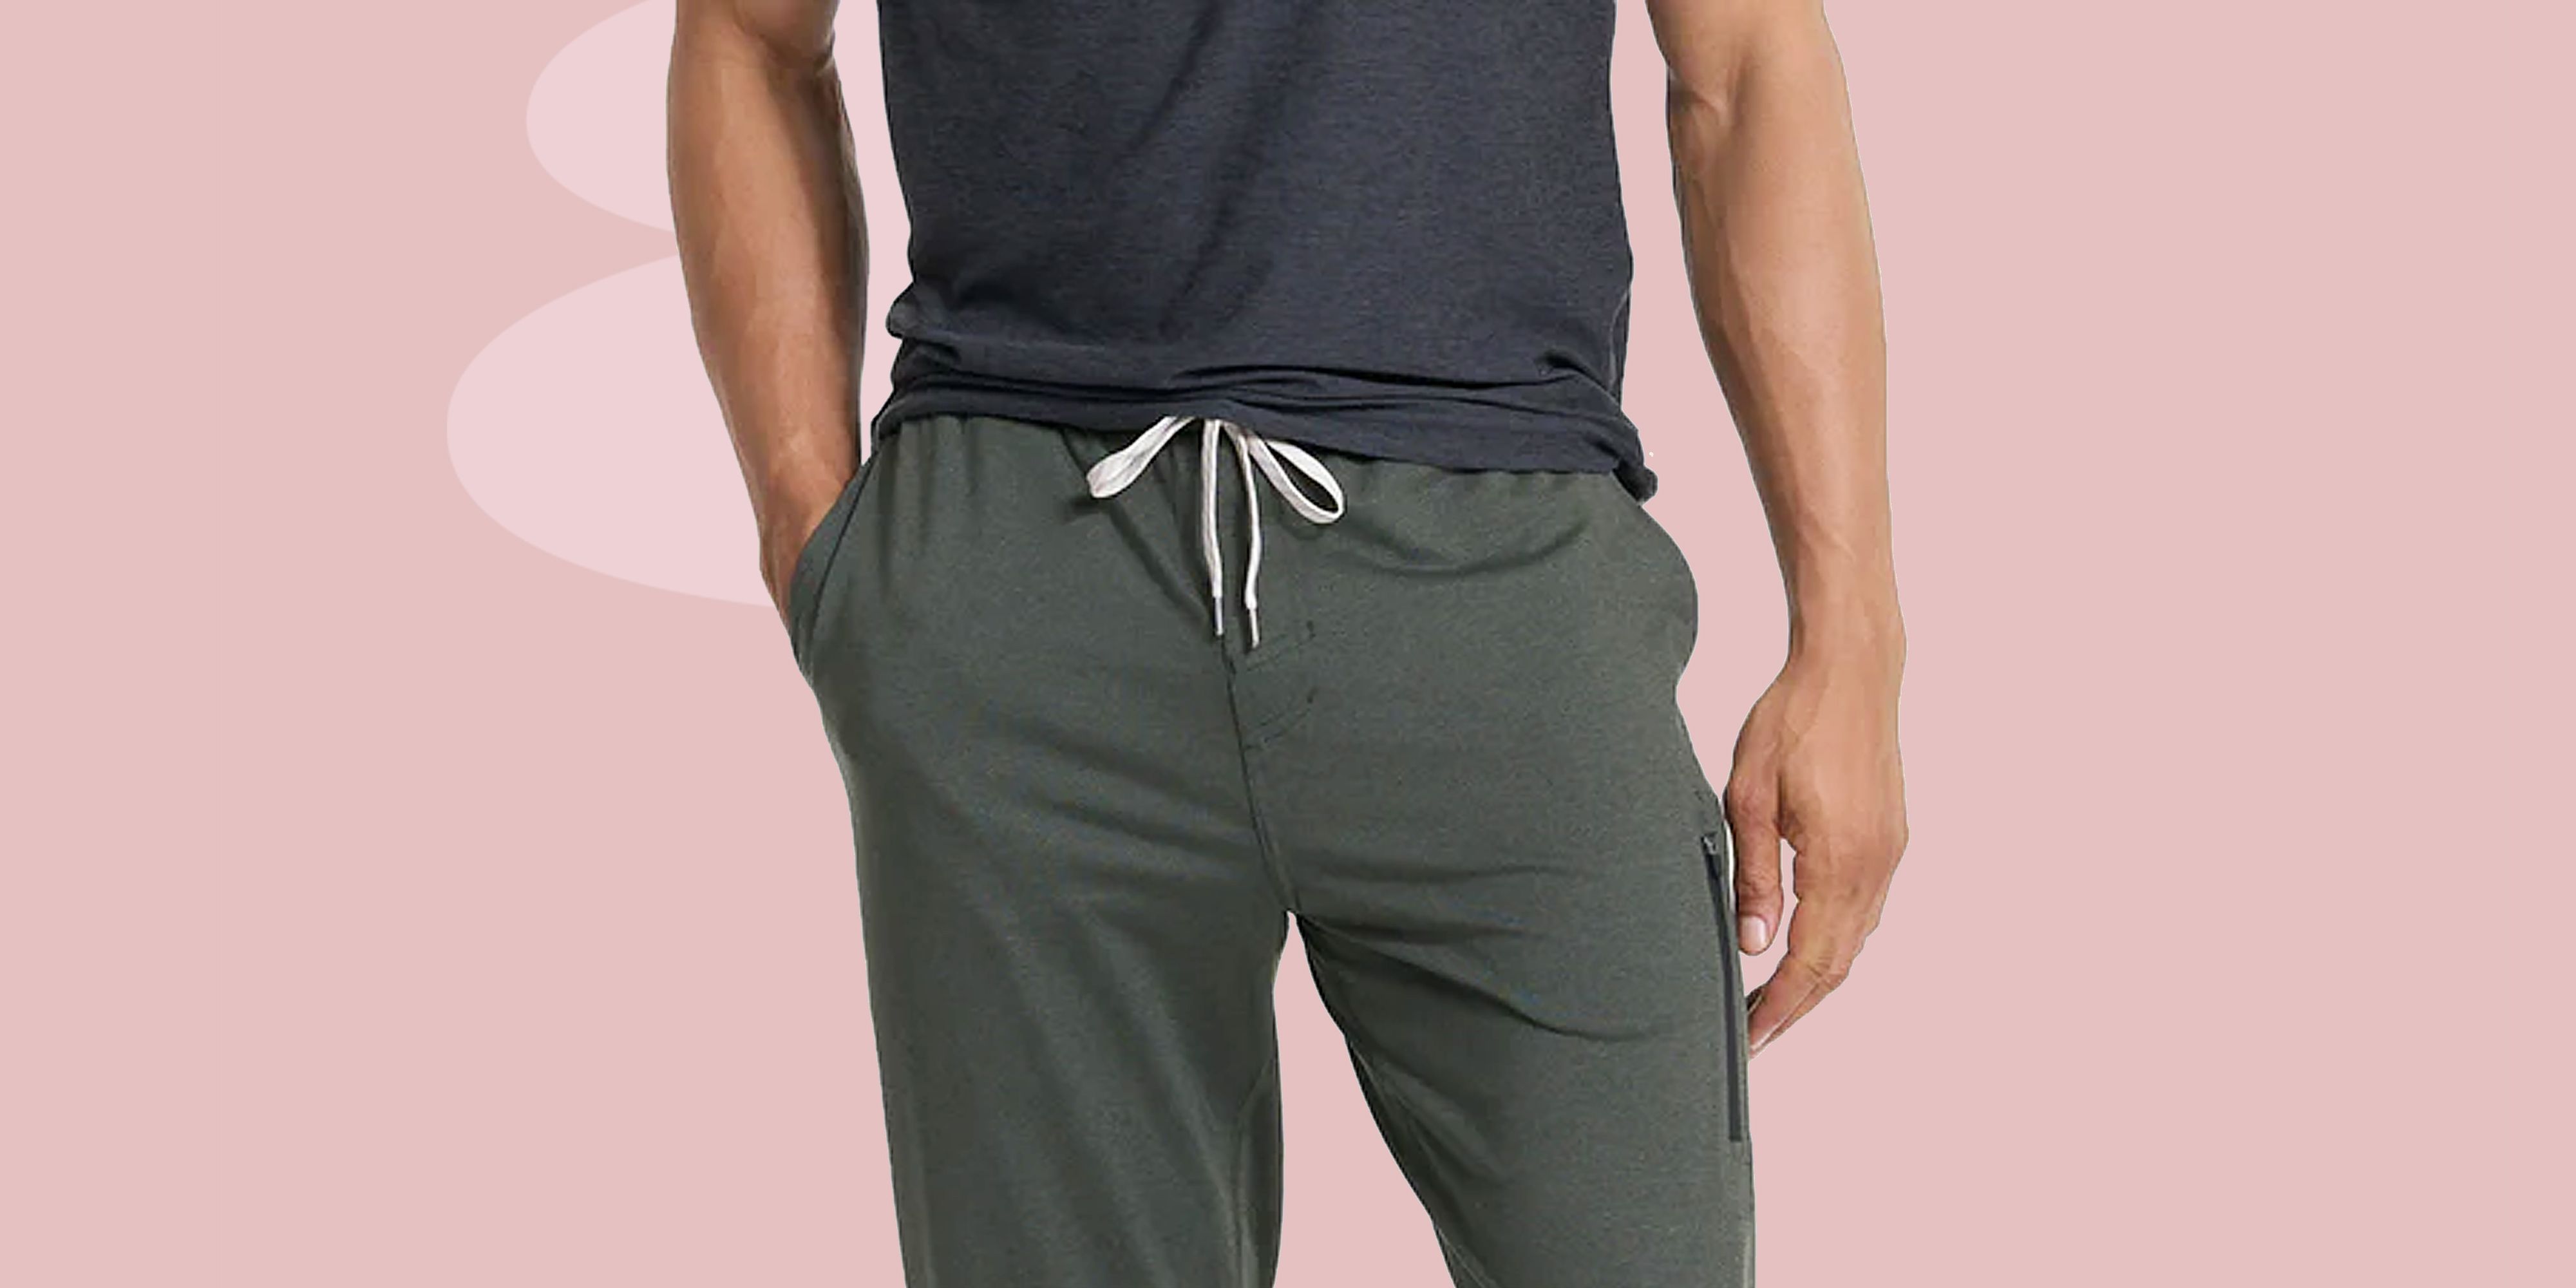 New Grey Needles Sweatpants Men Women Best Quality High Street Track Pants  Green Butterfly AWGE Sporty Trousers Hip Hop